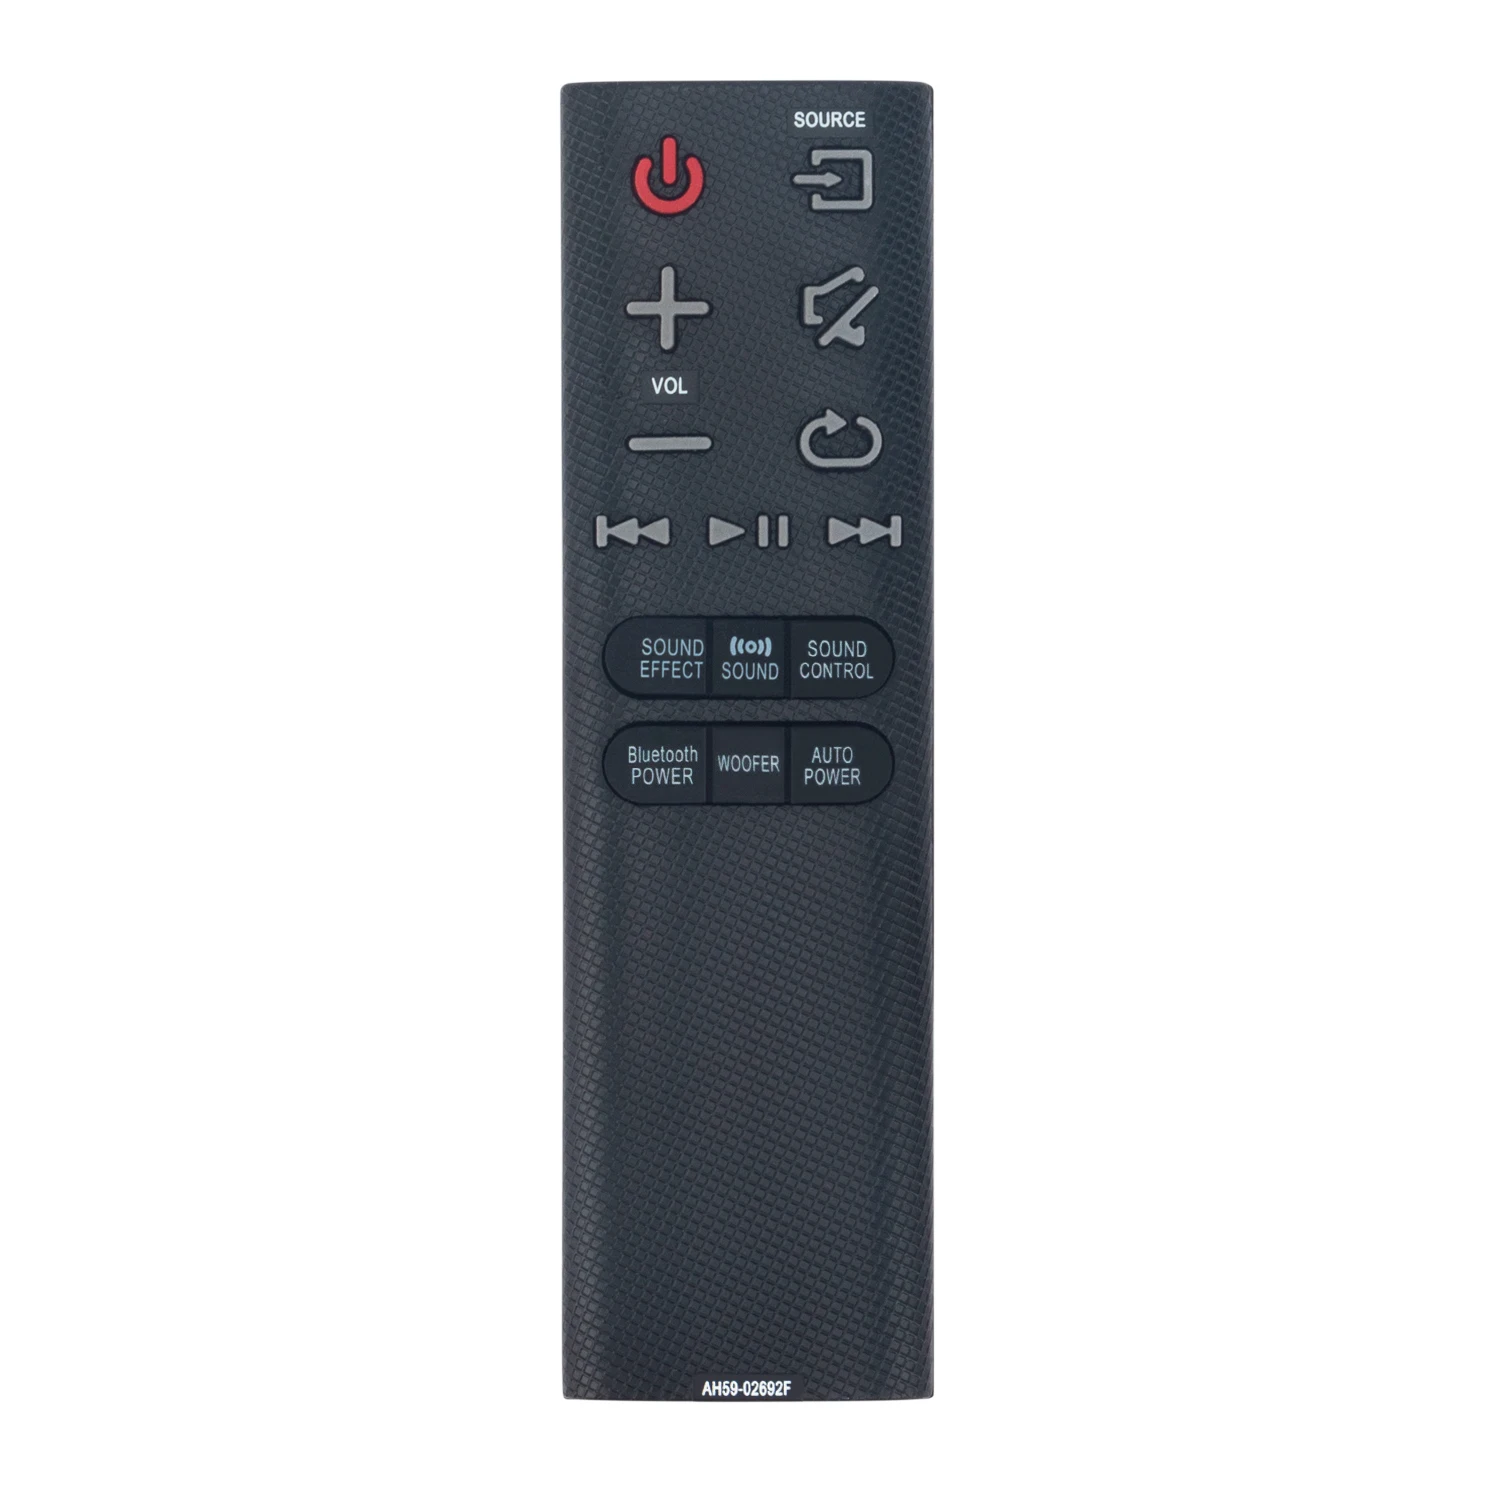 New AH59-02692F Replaced Remote Control fit for Samsung Soundbar HW-J430 HW-J355 HW-J551 HW-J6000 | Электроника